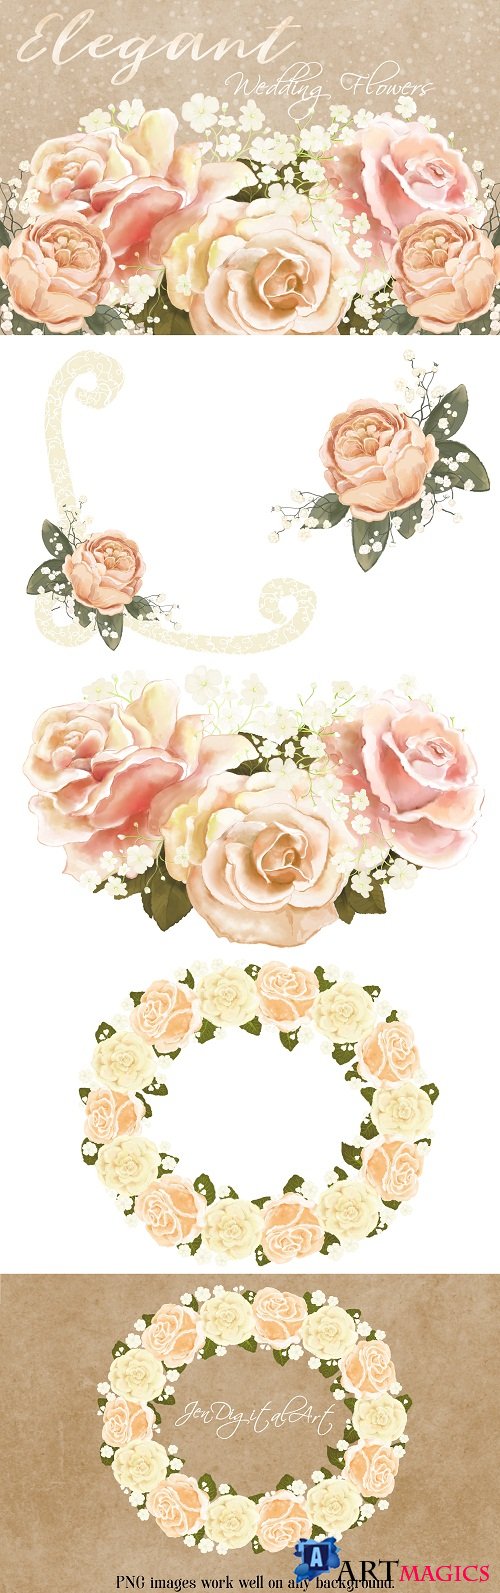 Elegant Wedding Flowers - 204396